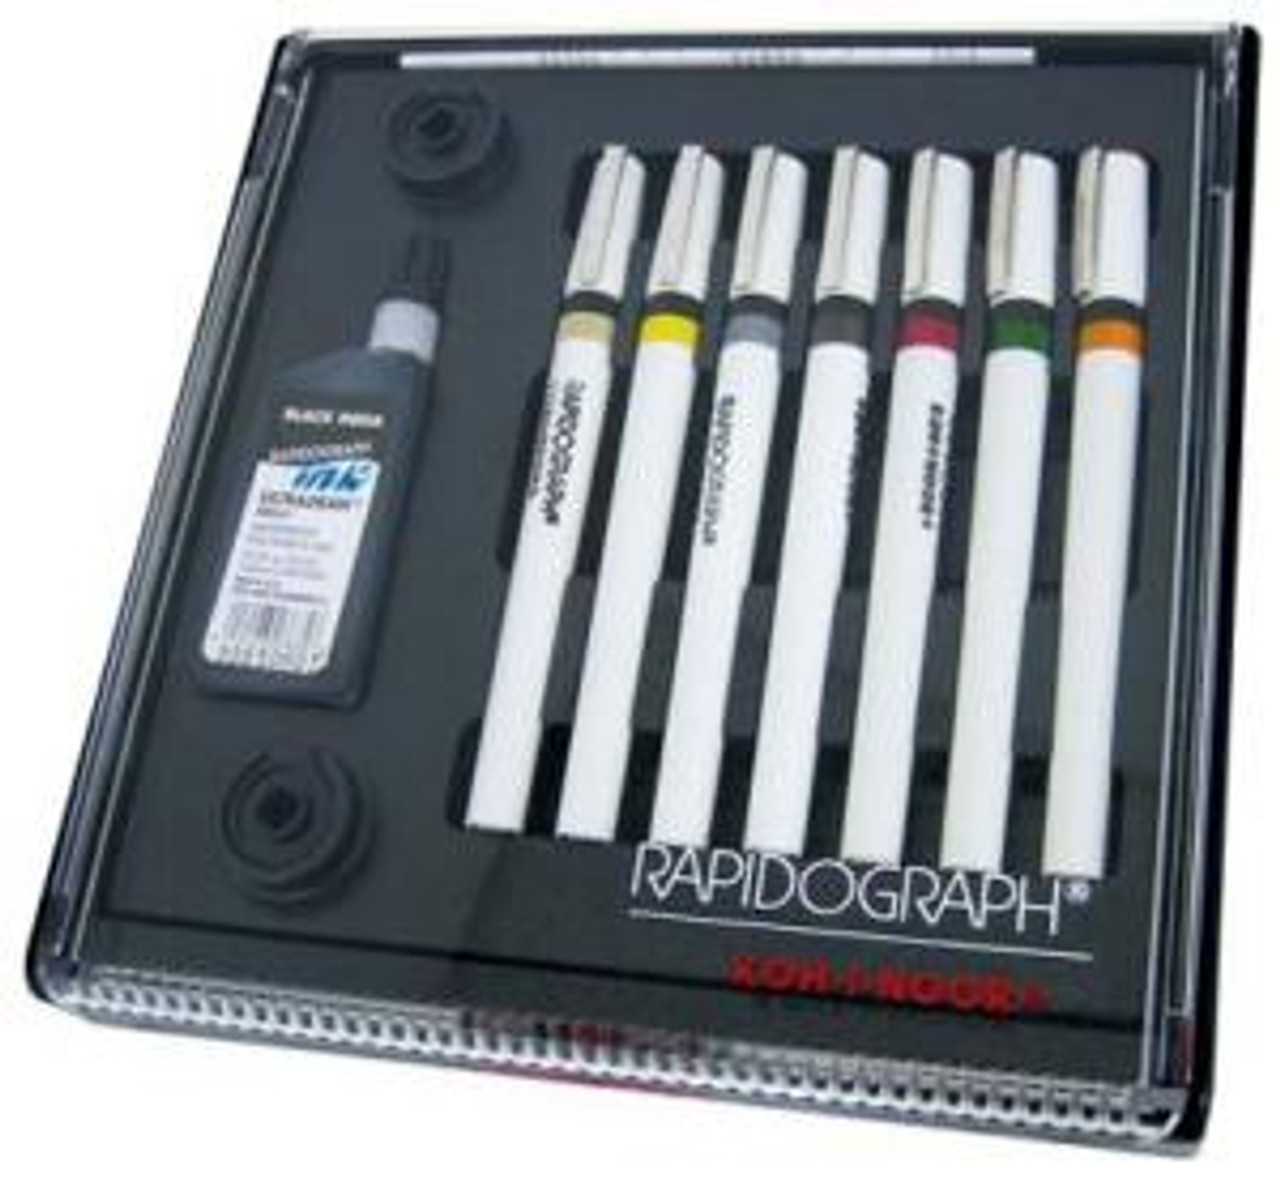 Rapidograph Technical 7 Pen Set 